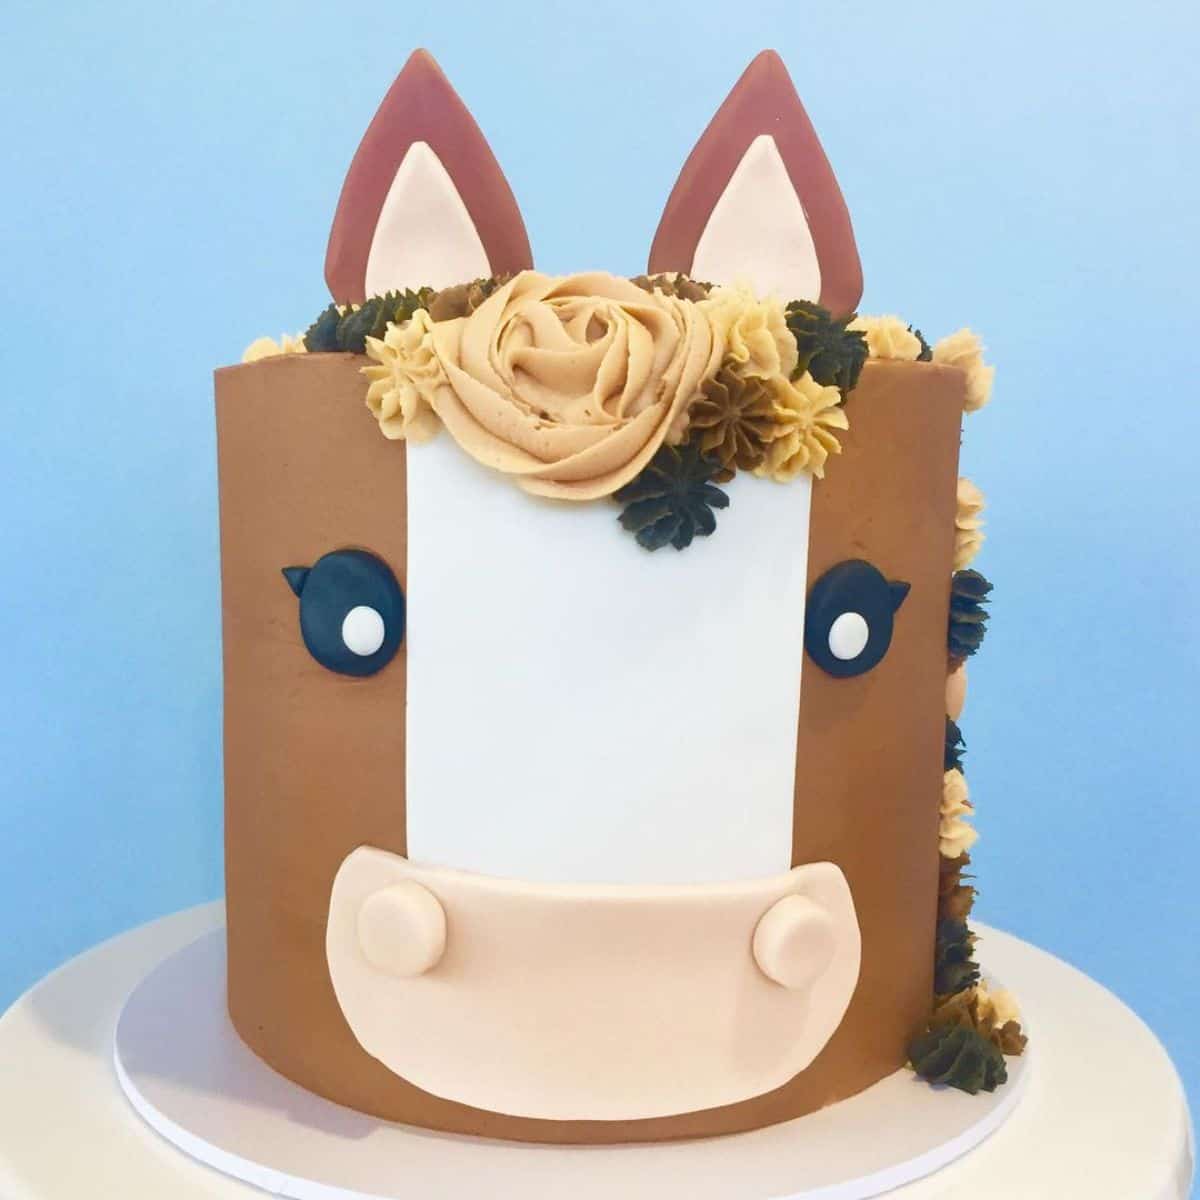 Hore-inspired birthday cake.